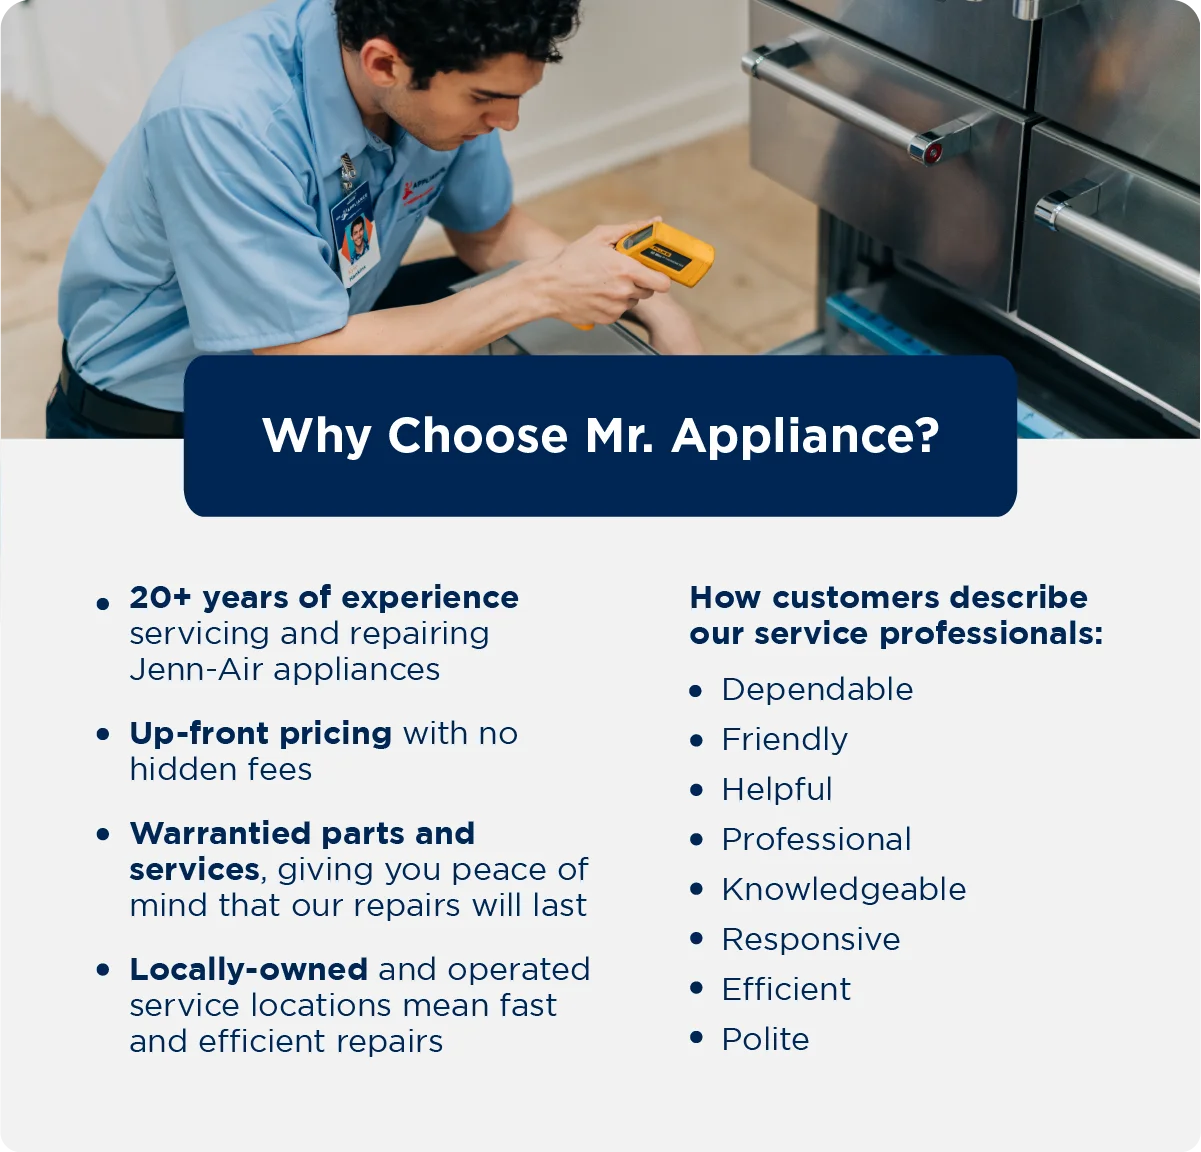 Illustration explaining the reasons a customer should choose Mr. Appliance for their Jenn-Air appliance needs